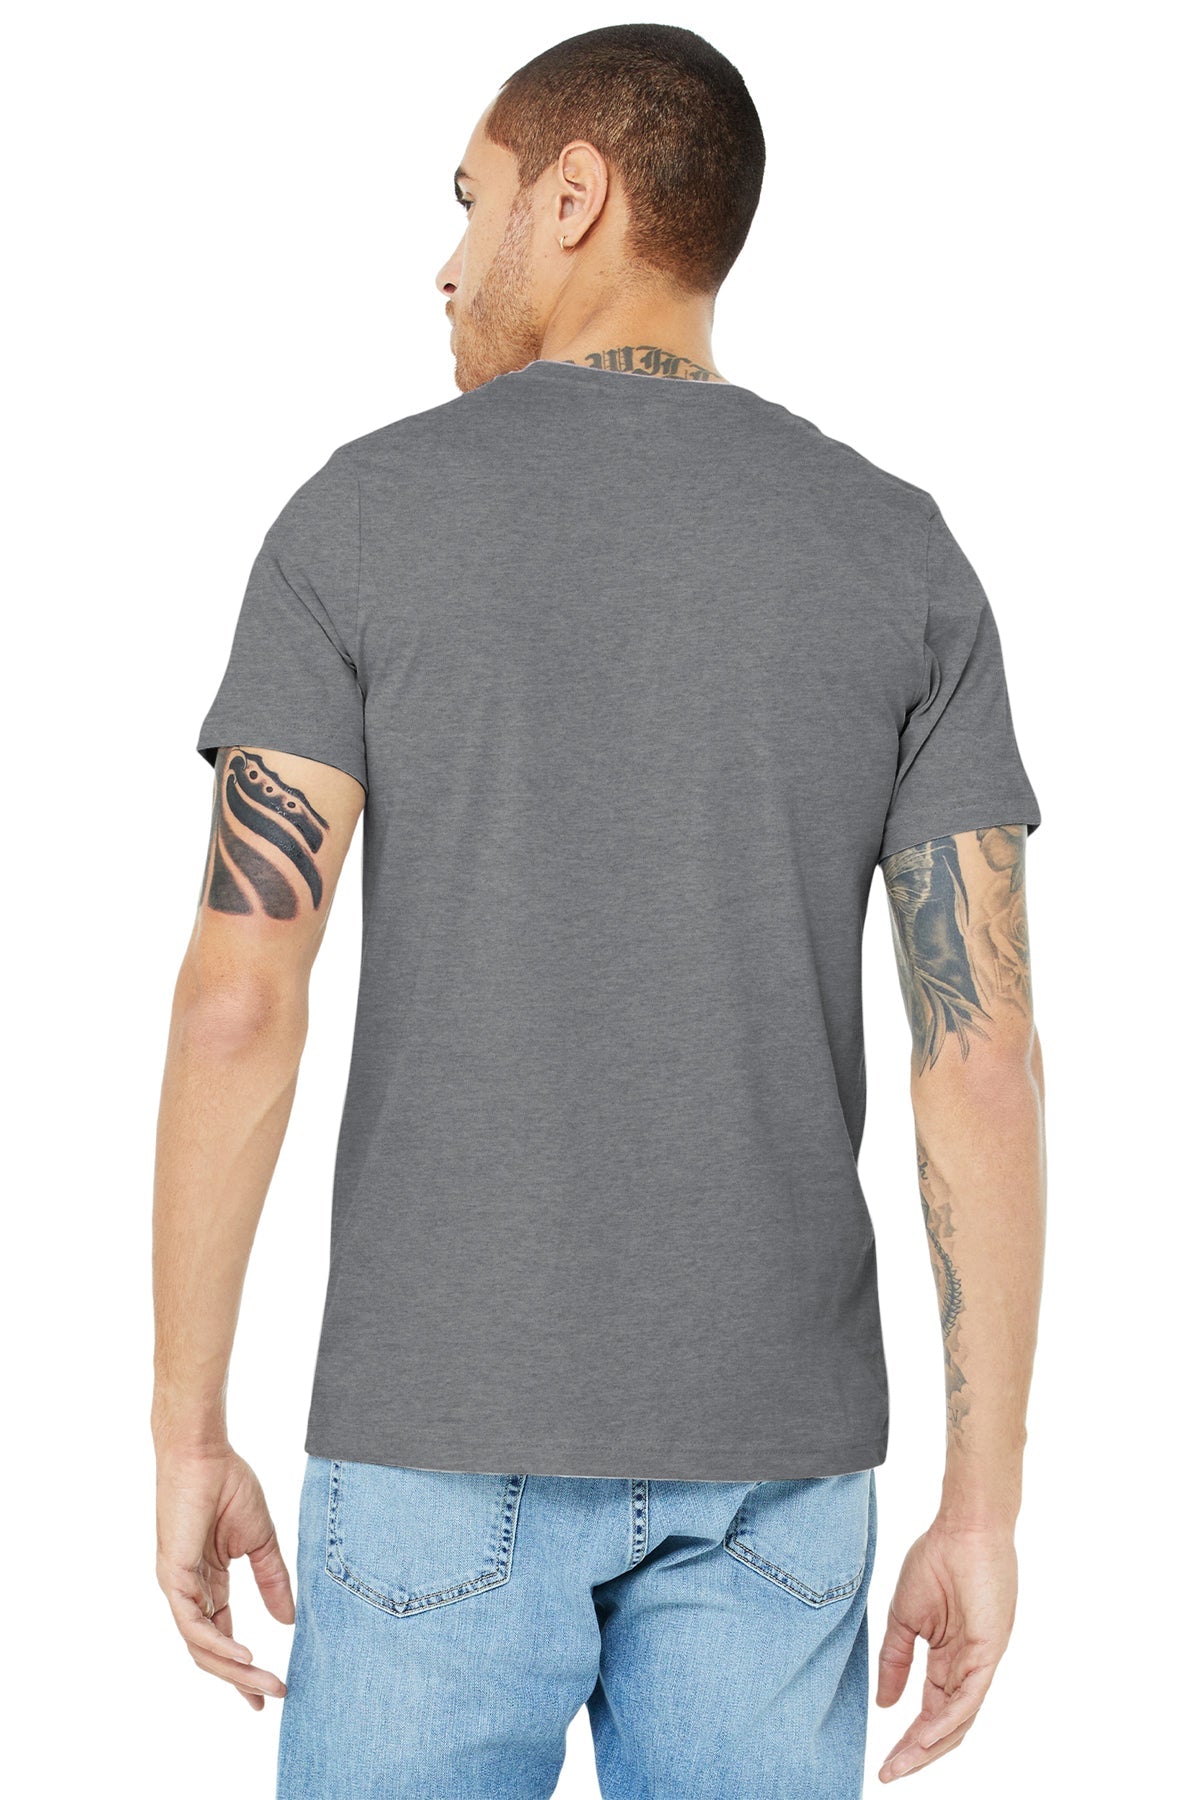 bella + canvas unisex jersey short sleeve t-shirt 3001c heather storm